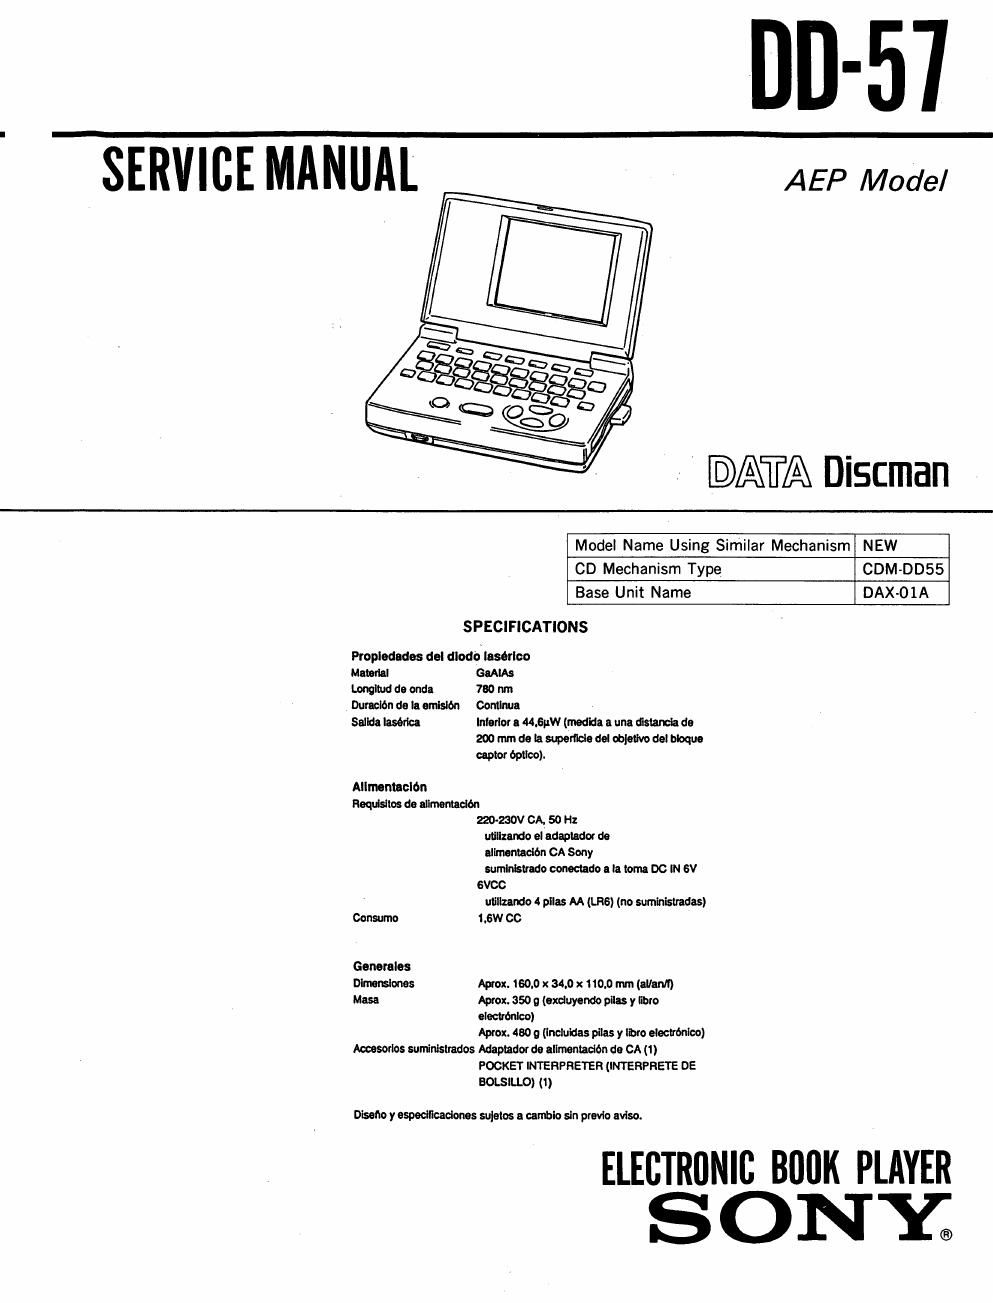 sony dd 57 service manual